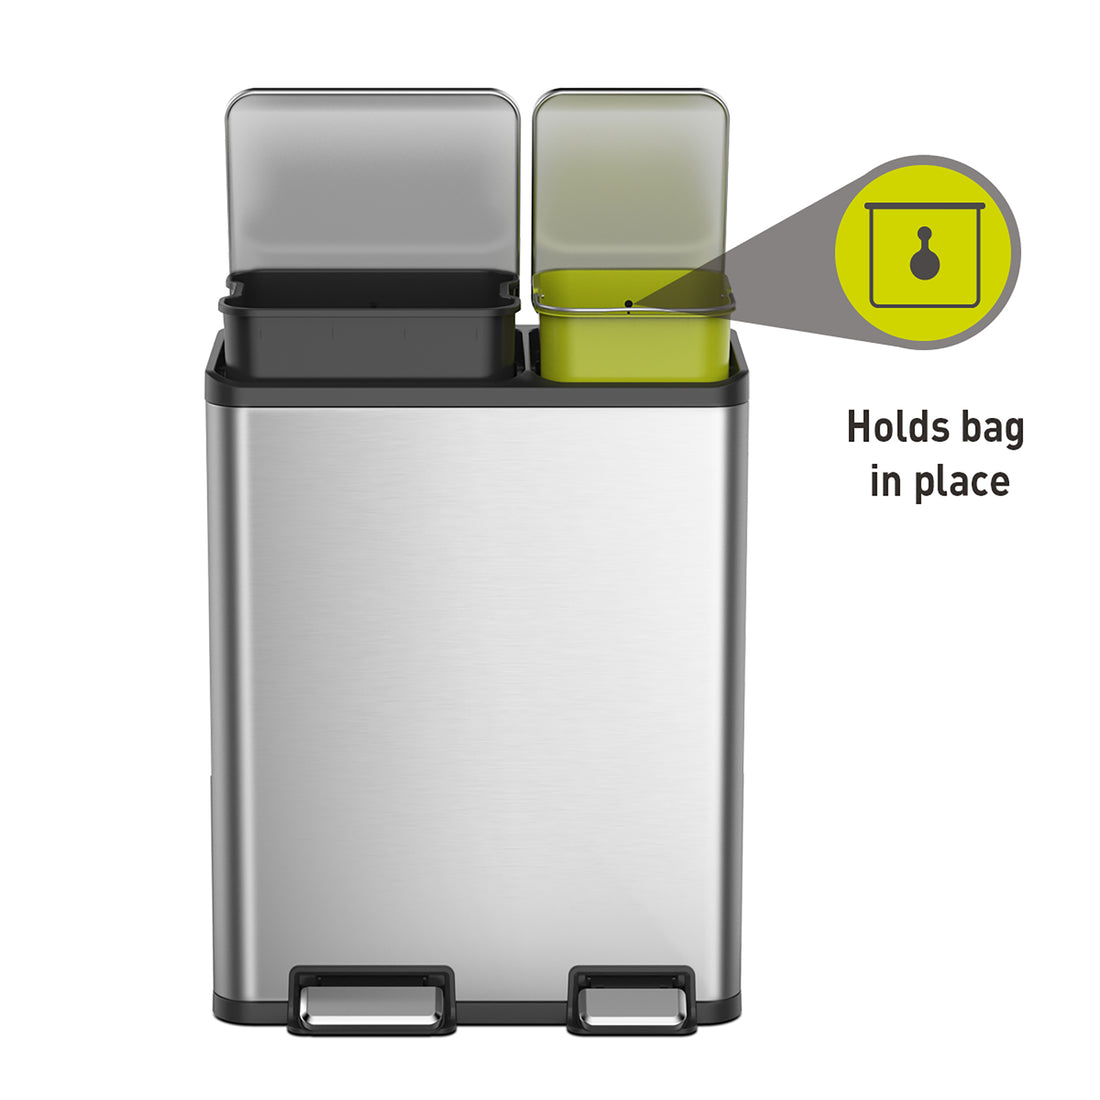 30 Liter/8 Gallon Trash Can, Rectangular Dual Compartment Kitchen